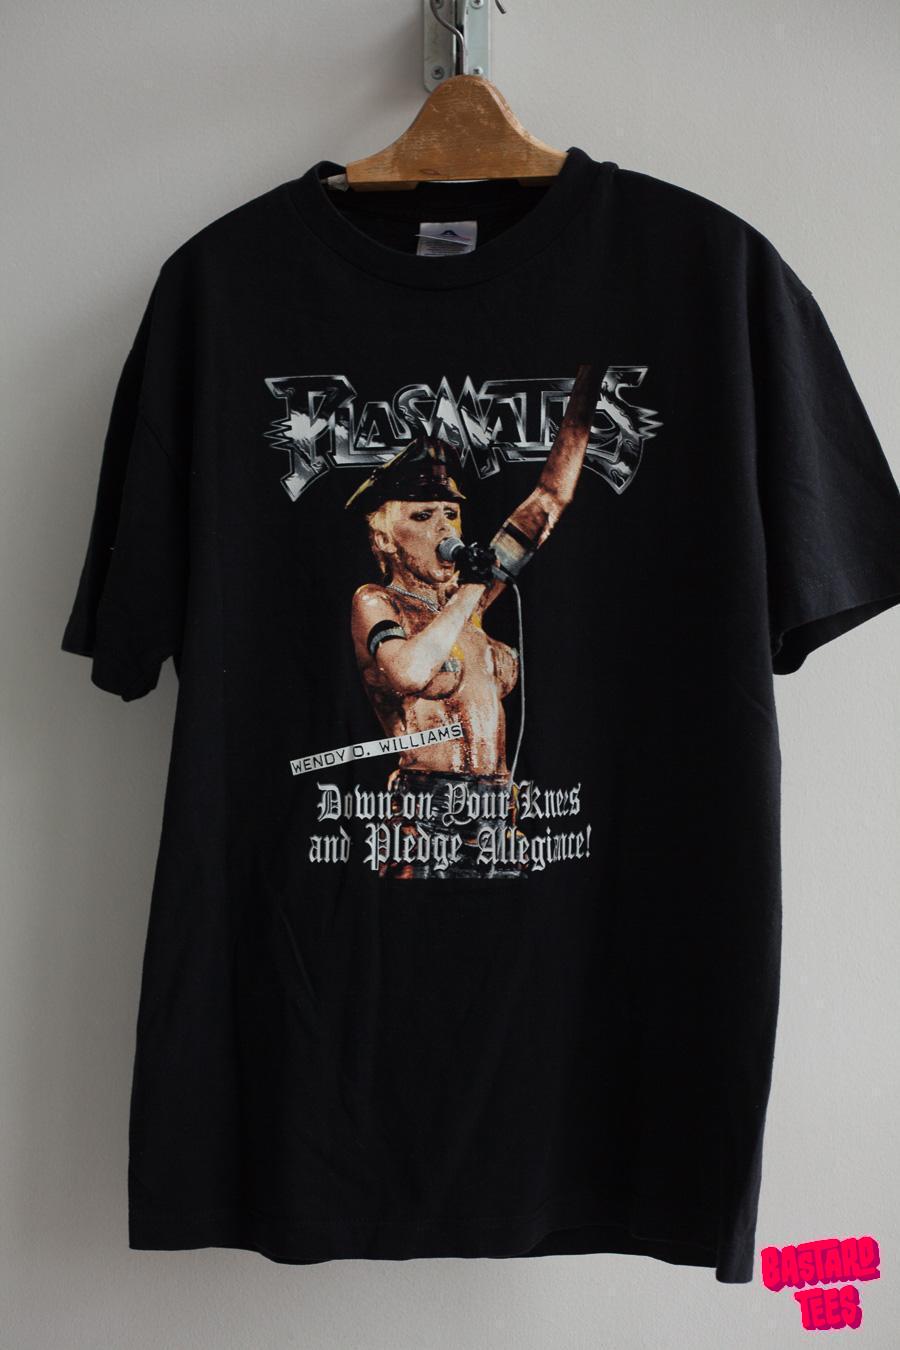 Wendy O Williams Plasmatics - Bastard Tees - Used Band T-shirts